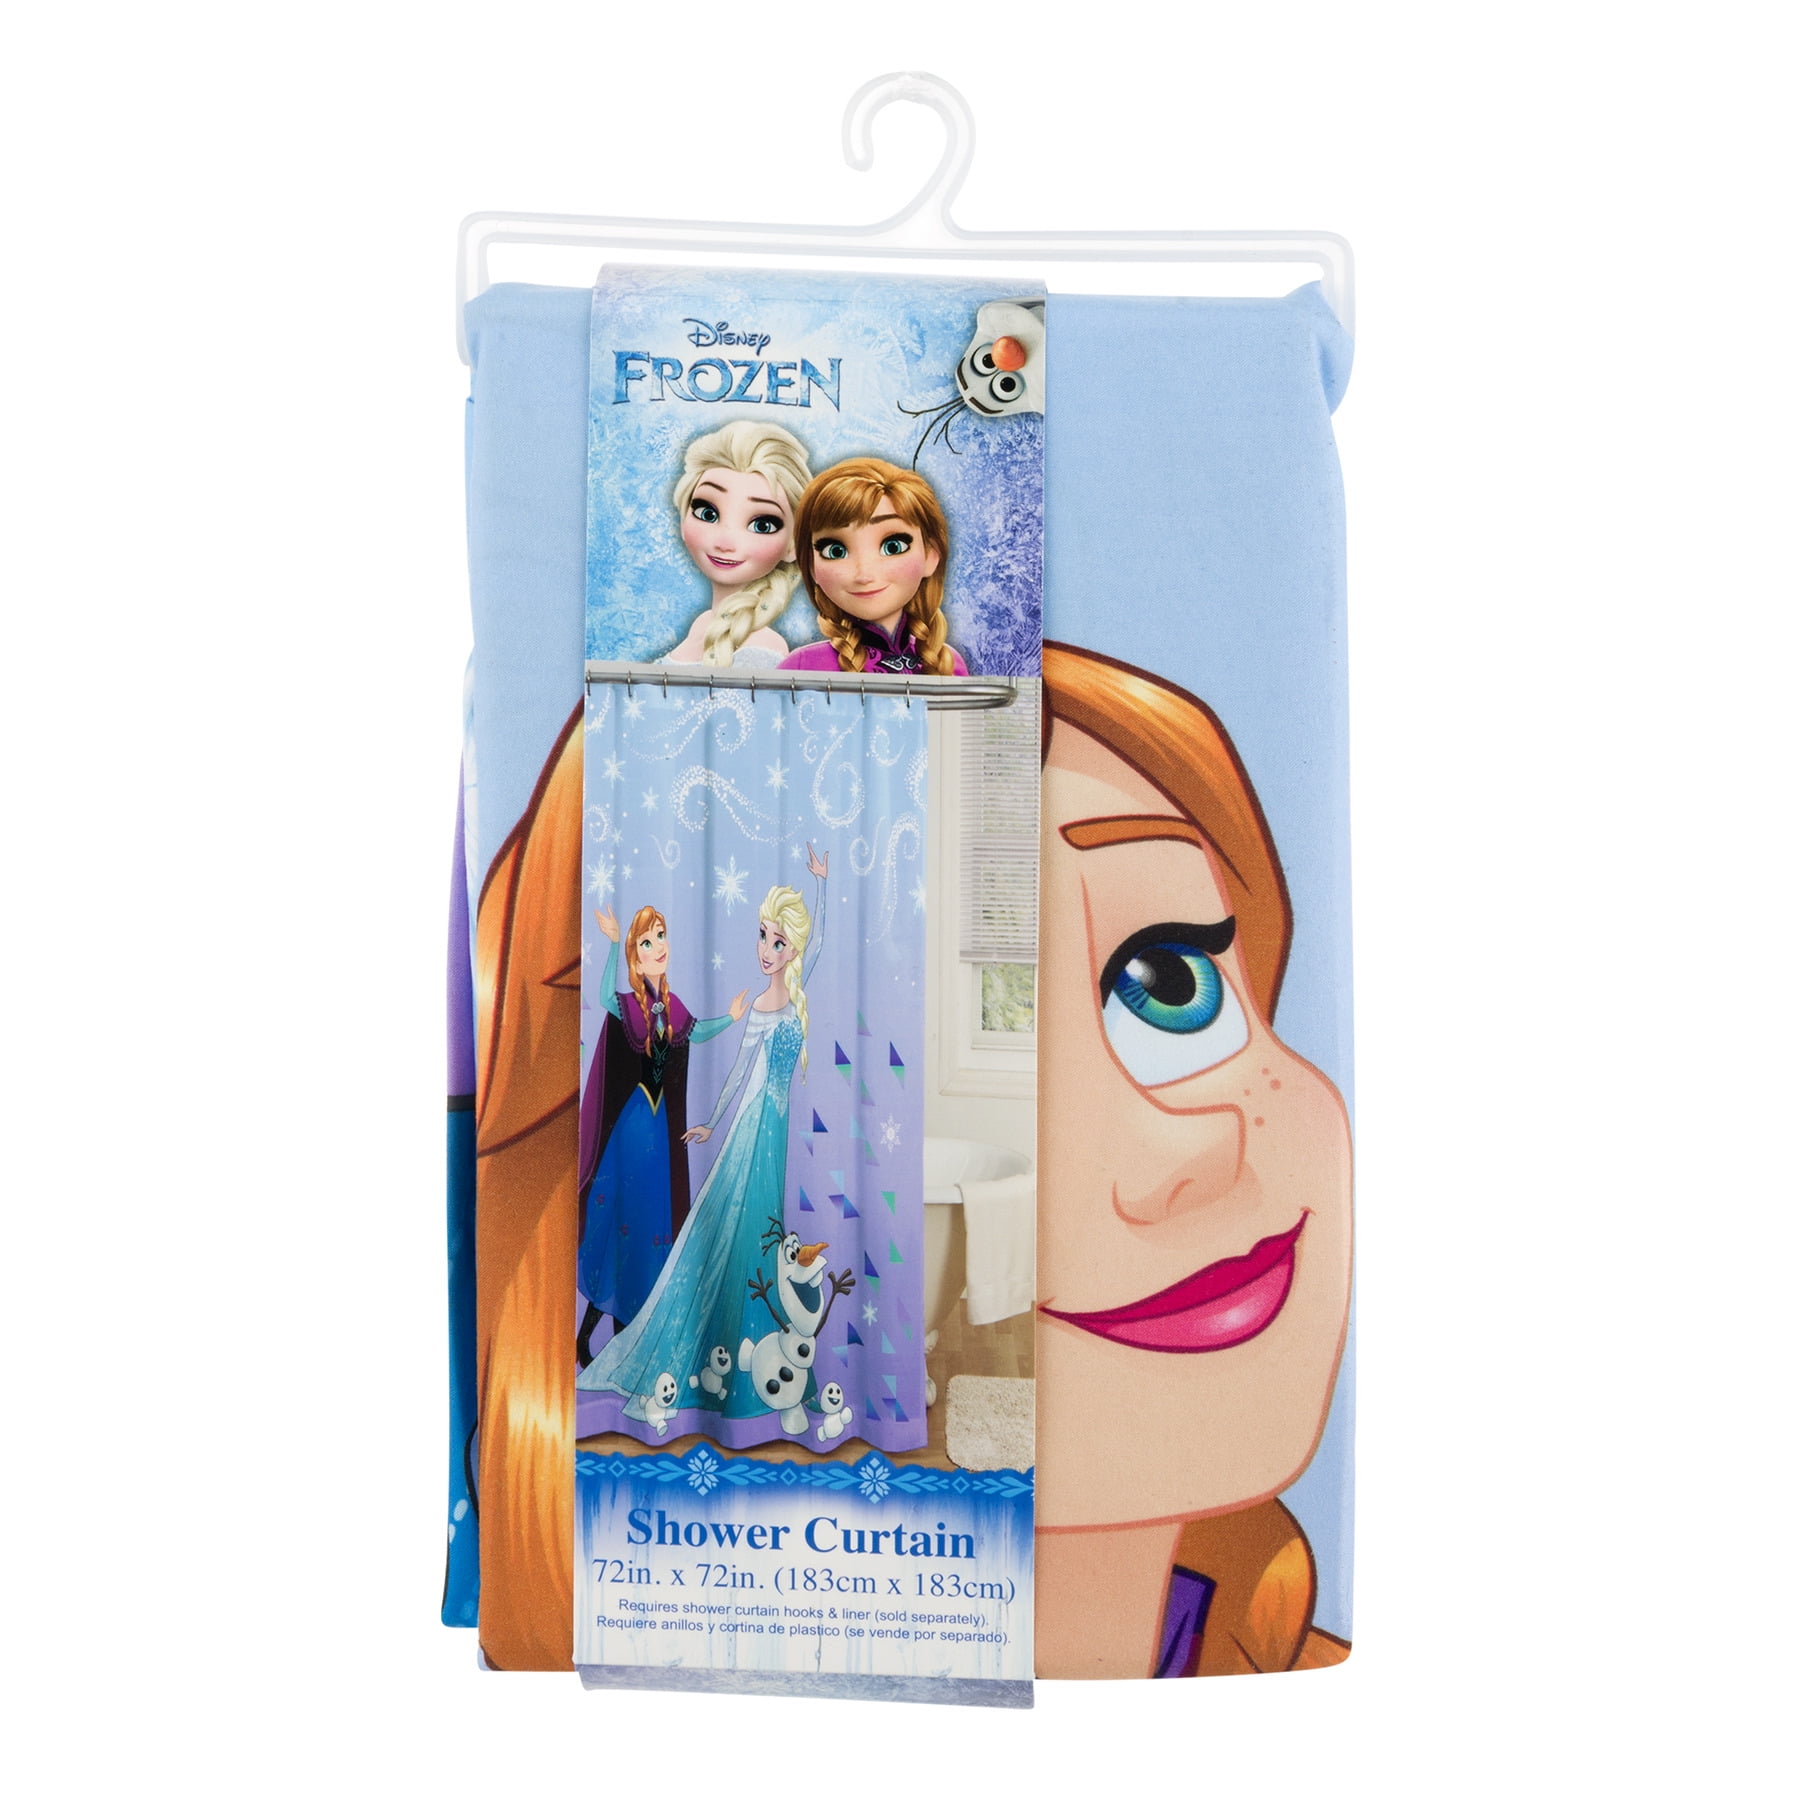 Disney Frozen 2 Believe in The Journey Shower Curtain 72in x 72in NEW 